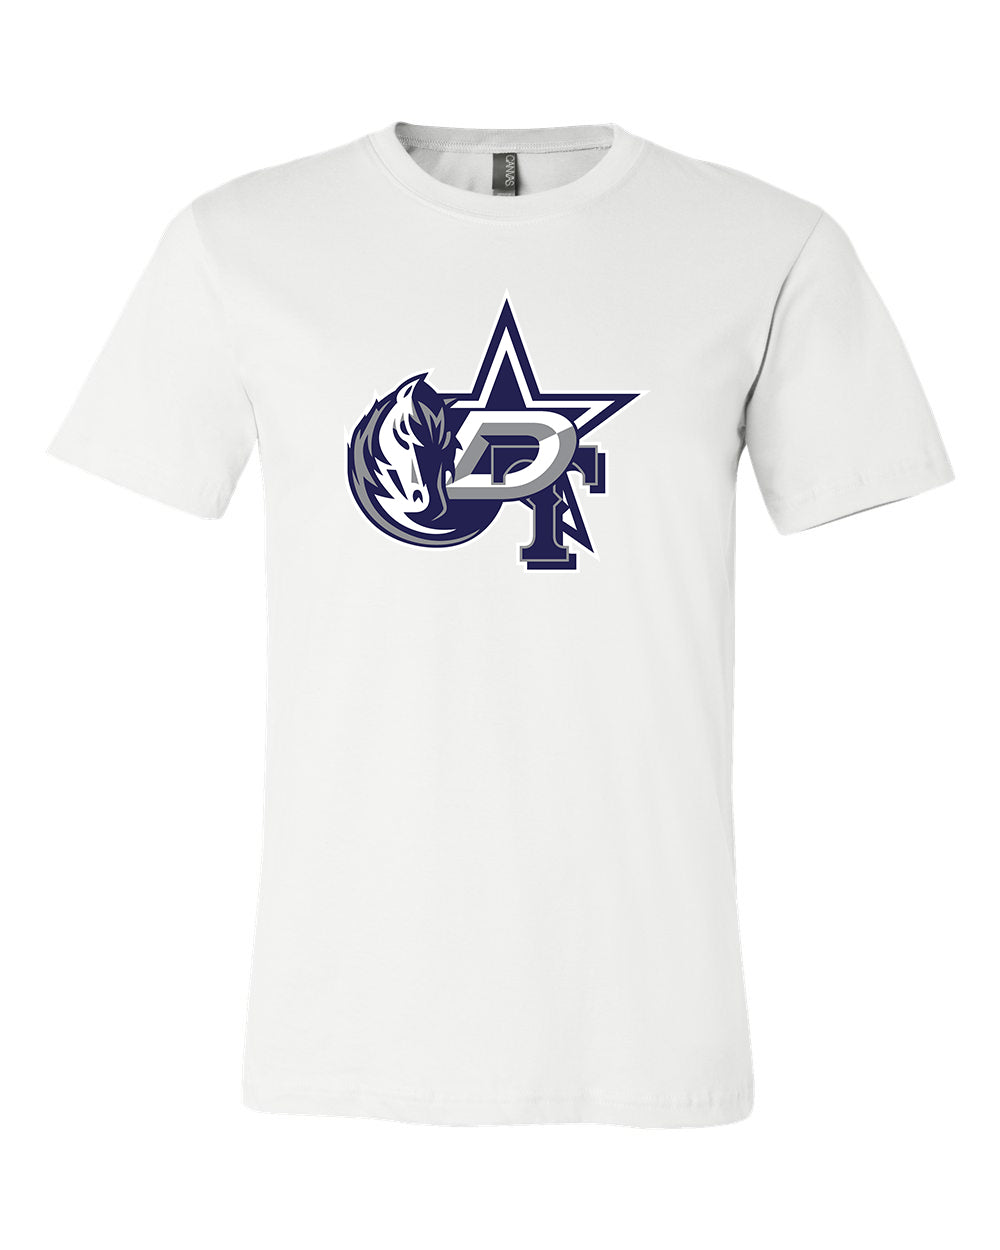 Atlanta Falcons Atlanta Braves MASH UP Logo T-shirt 6 Sizes S-3XL